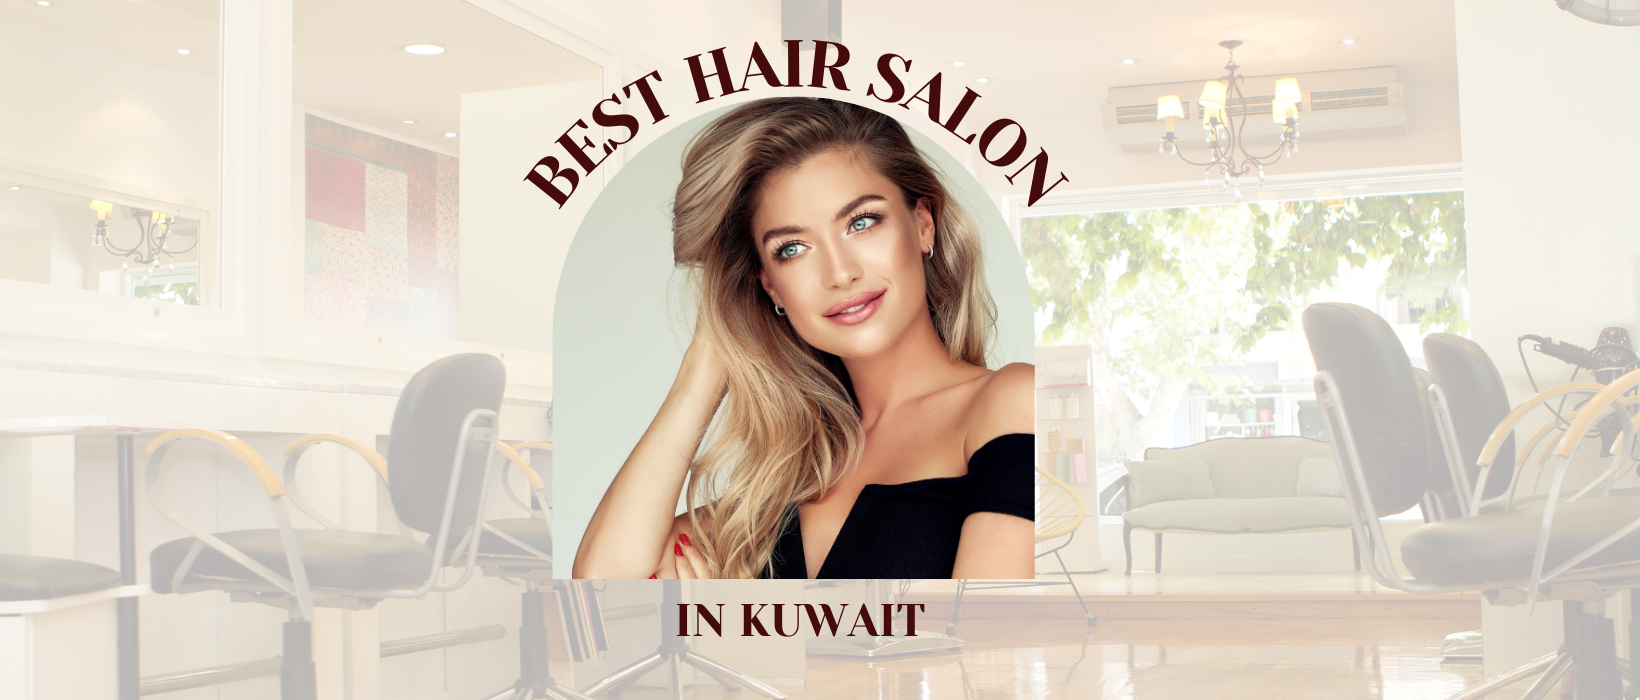 Best Hair Salon in Kuwait – Top 18 salons in Kuwait